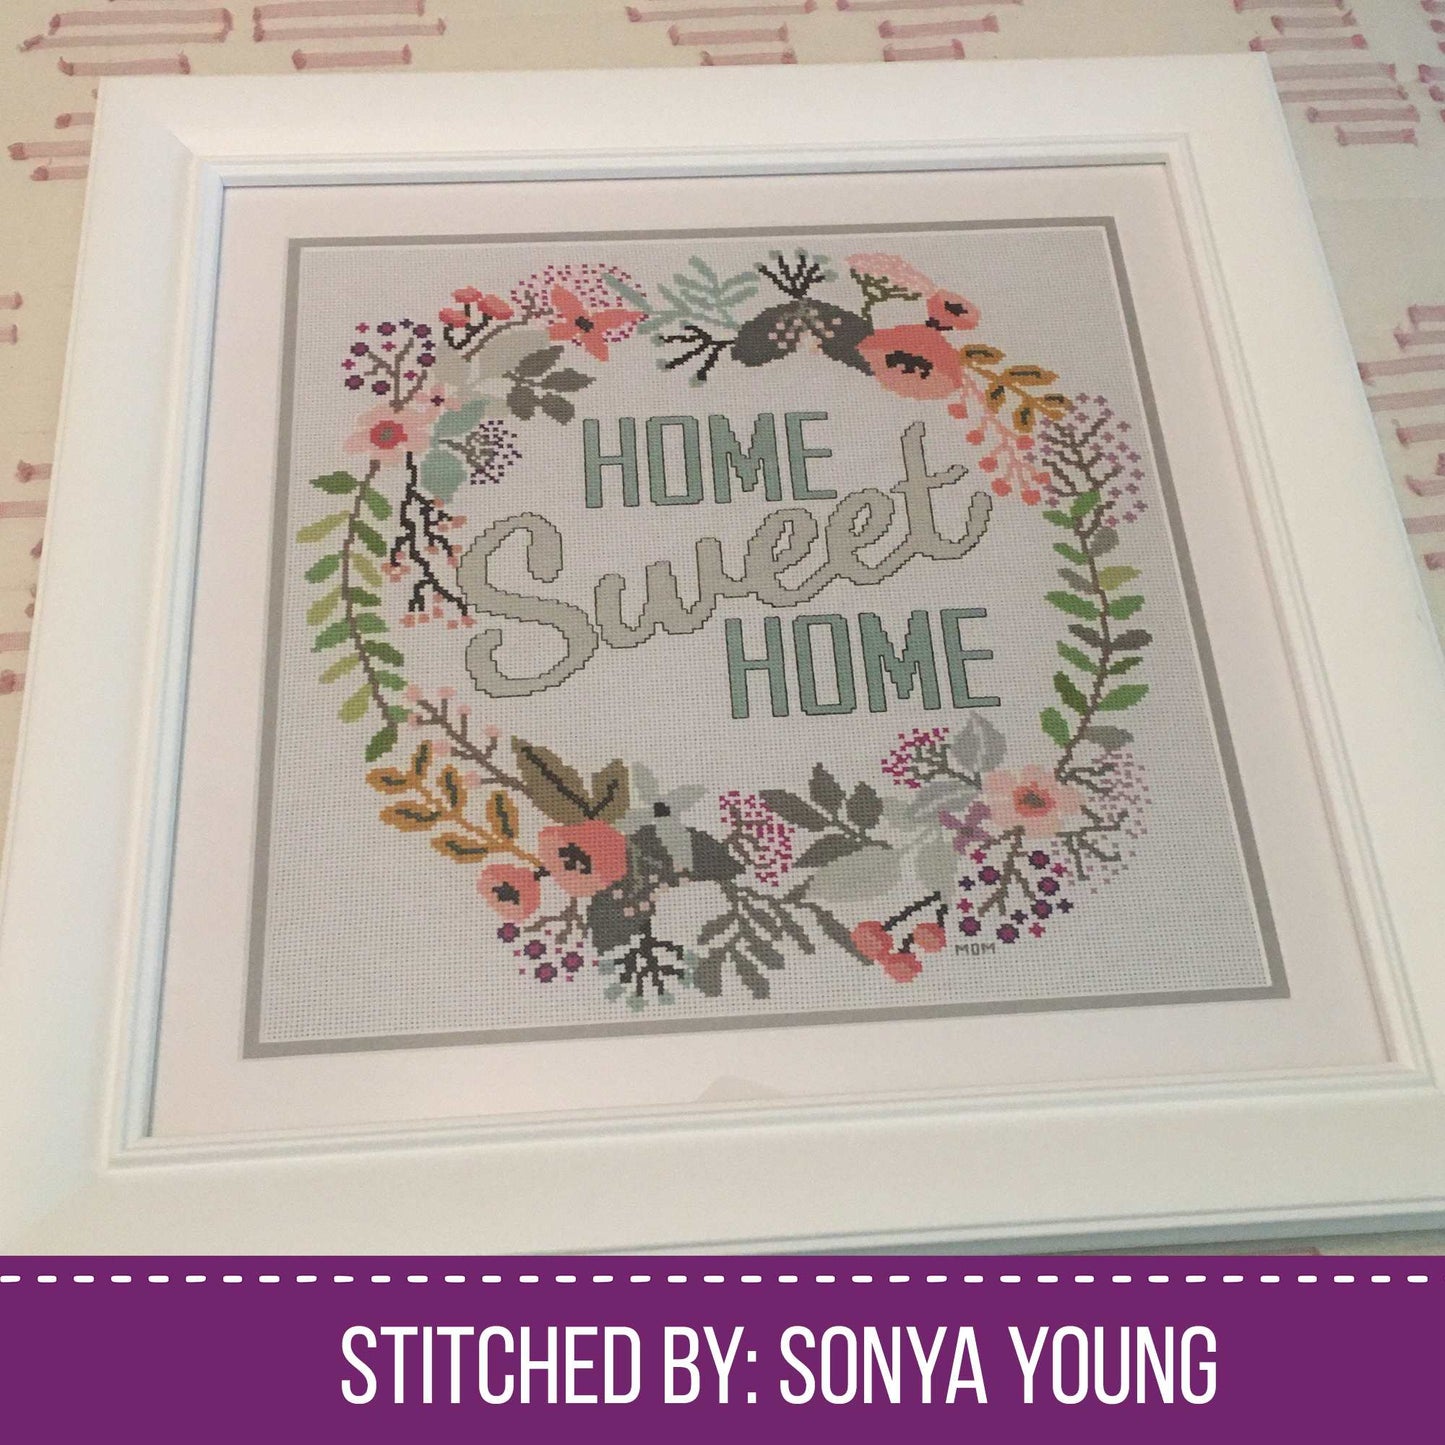 Home Sweet Home - Blackwork Patterns & Cross Stitch by Peppermint Purple